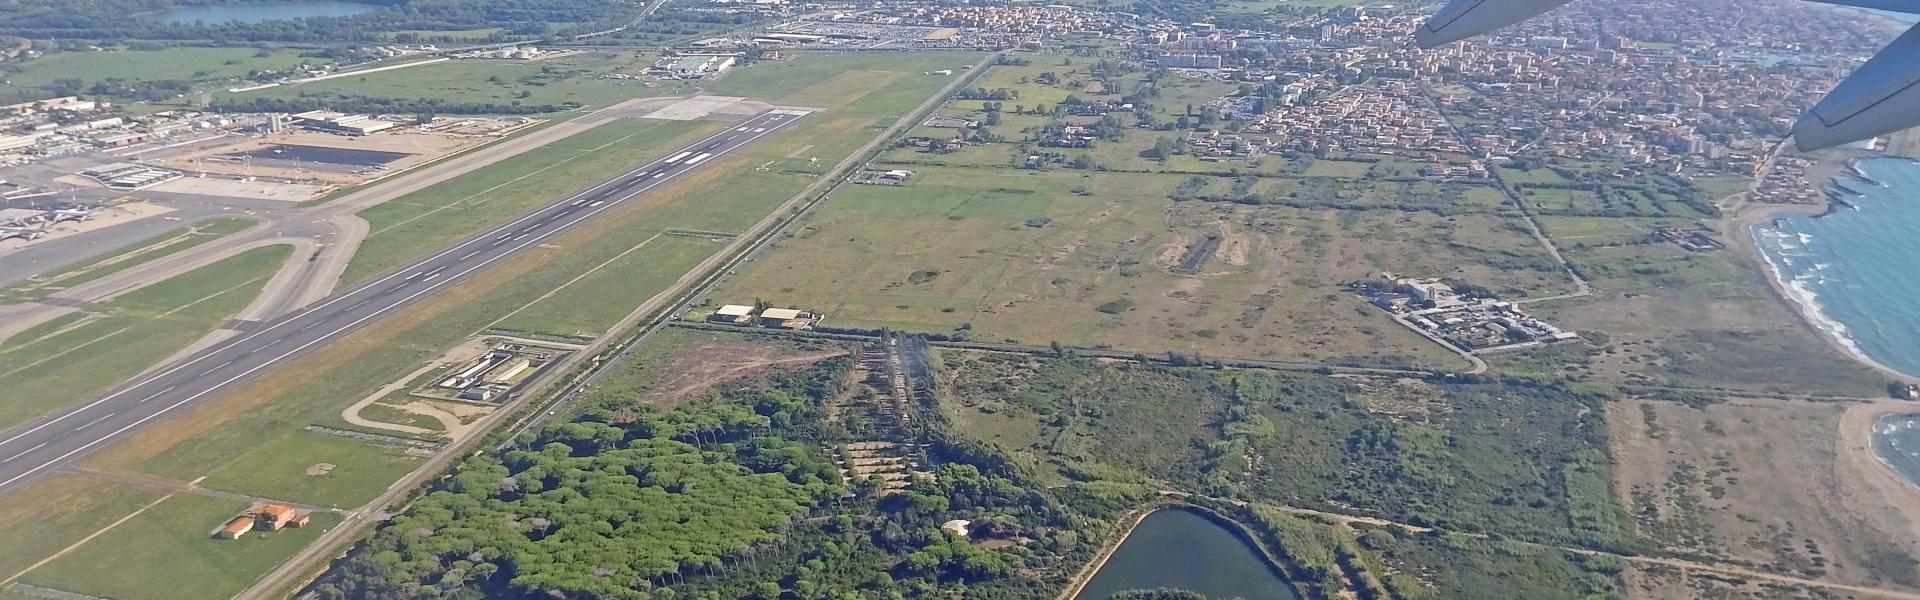 Fiumicino Aerial View